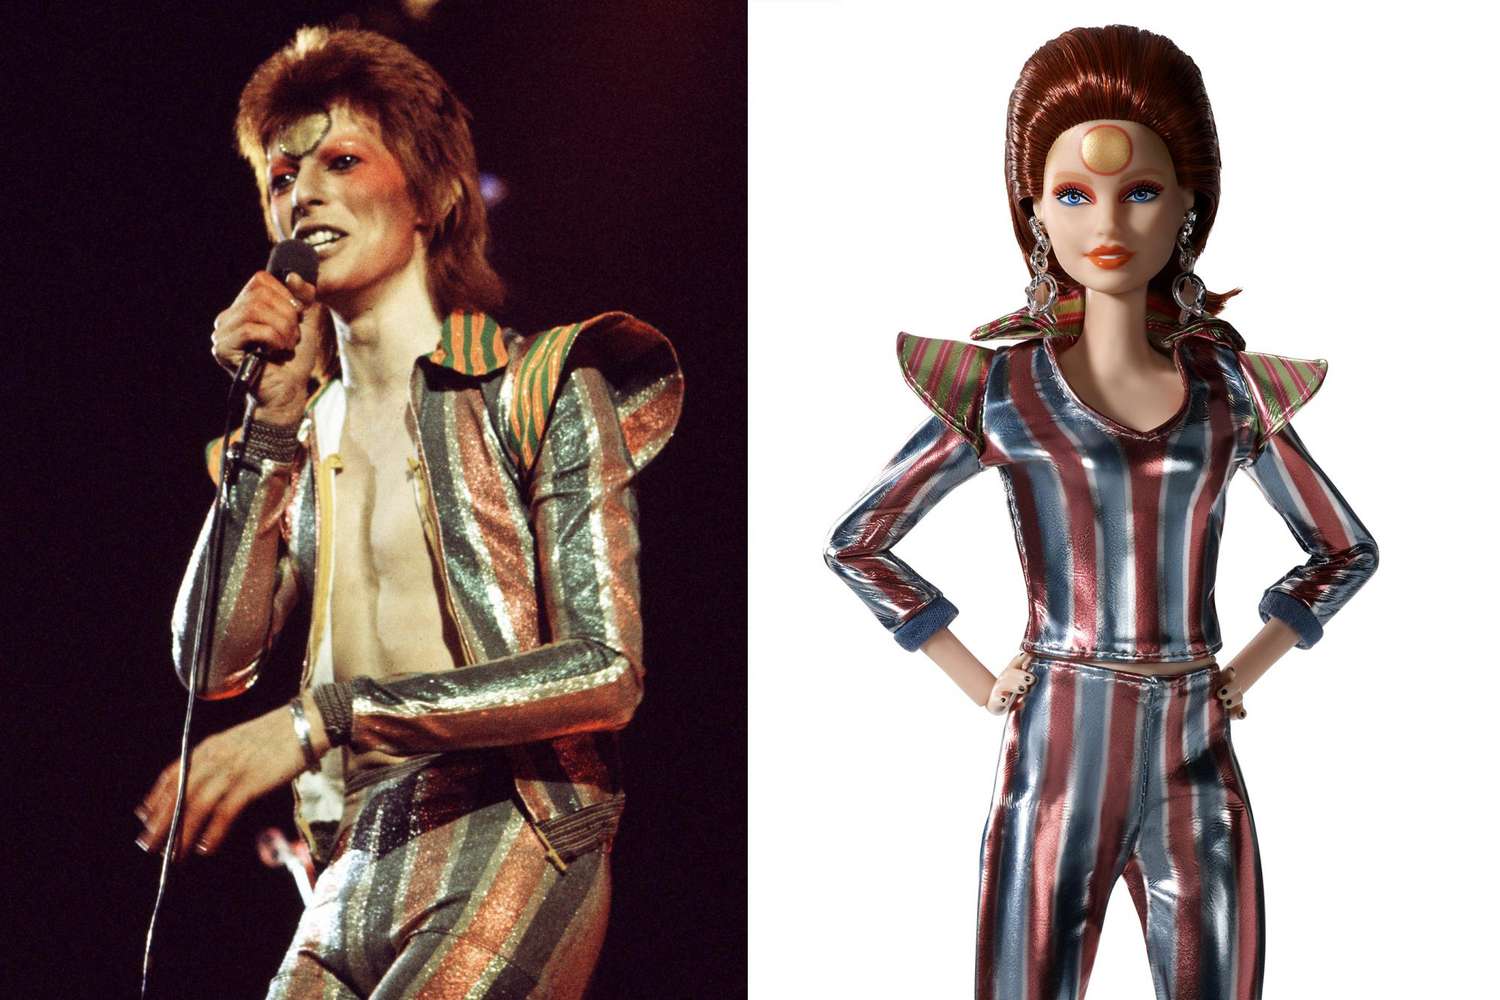 David Bowie's Ziggy Stardust Barbie debuts from